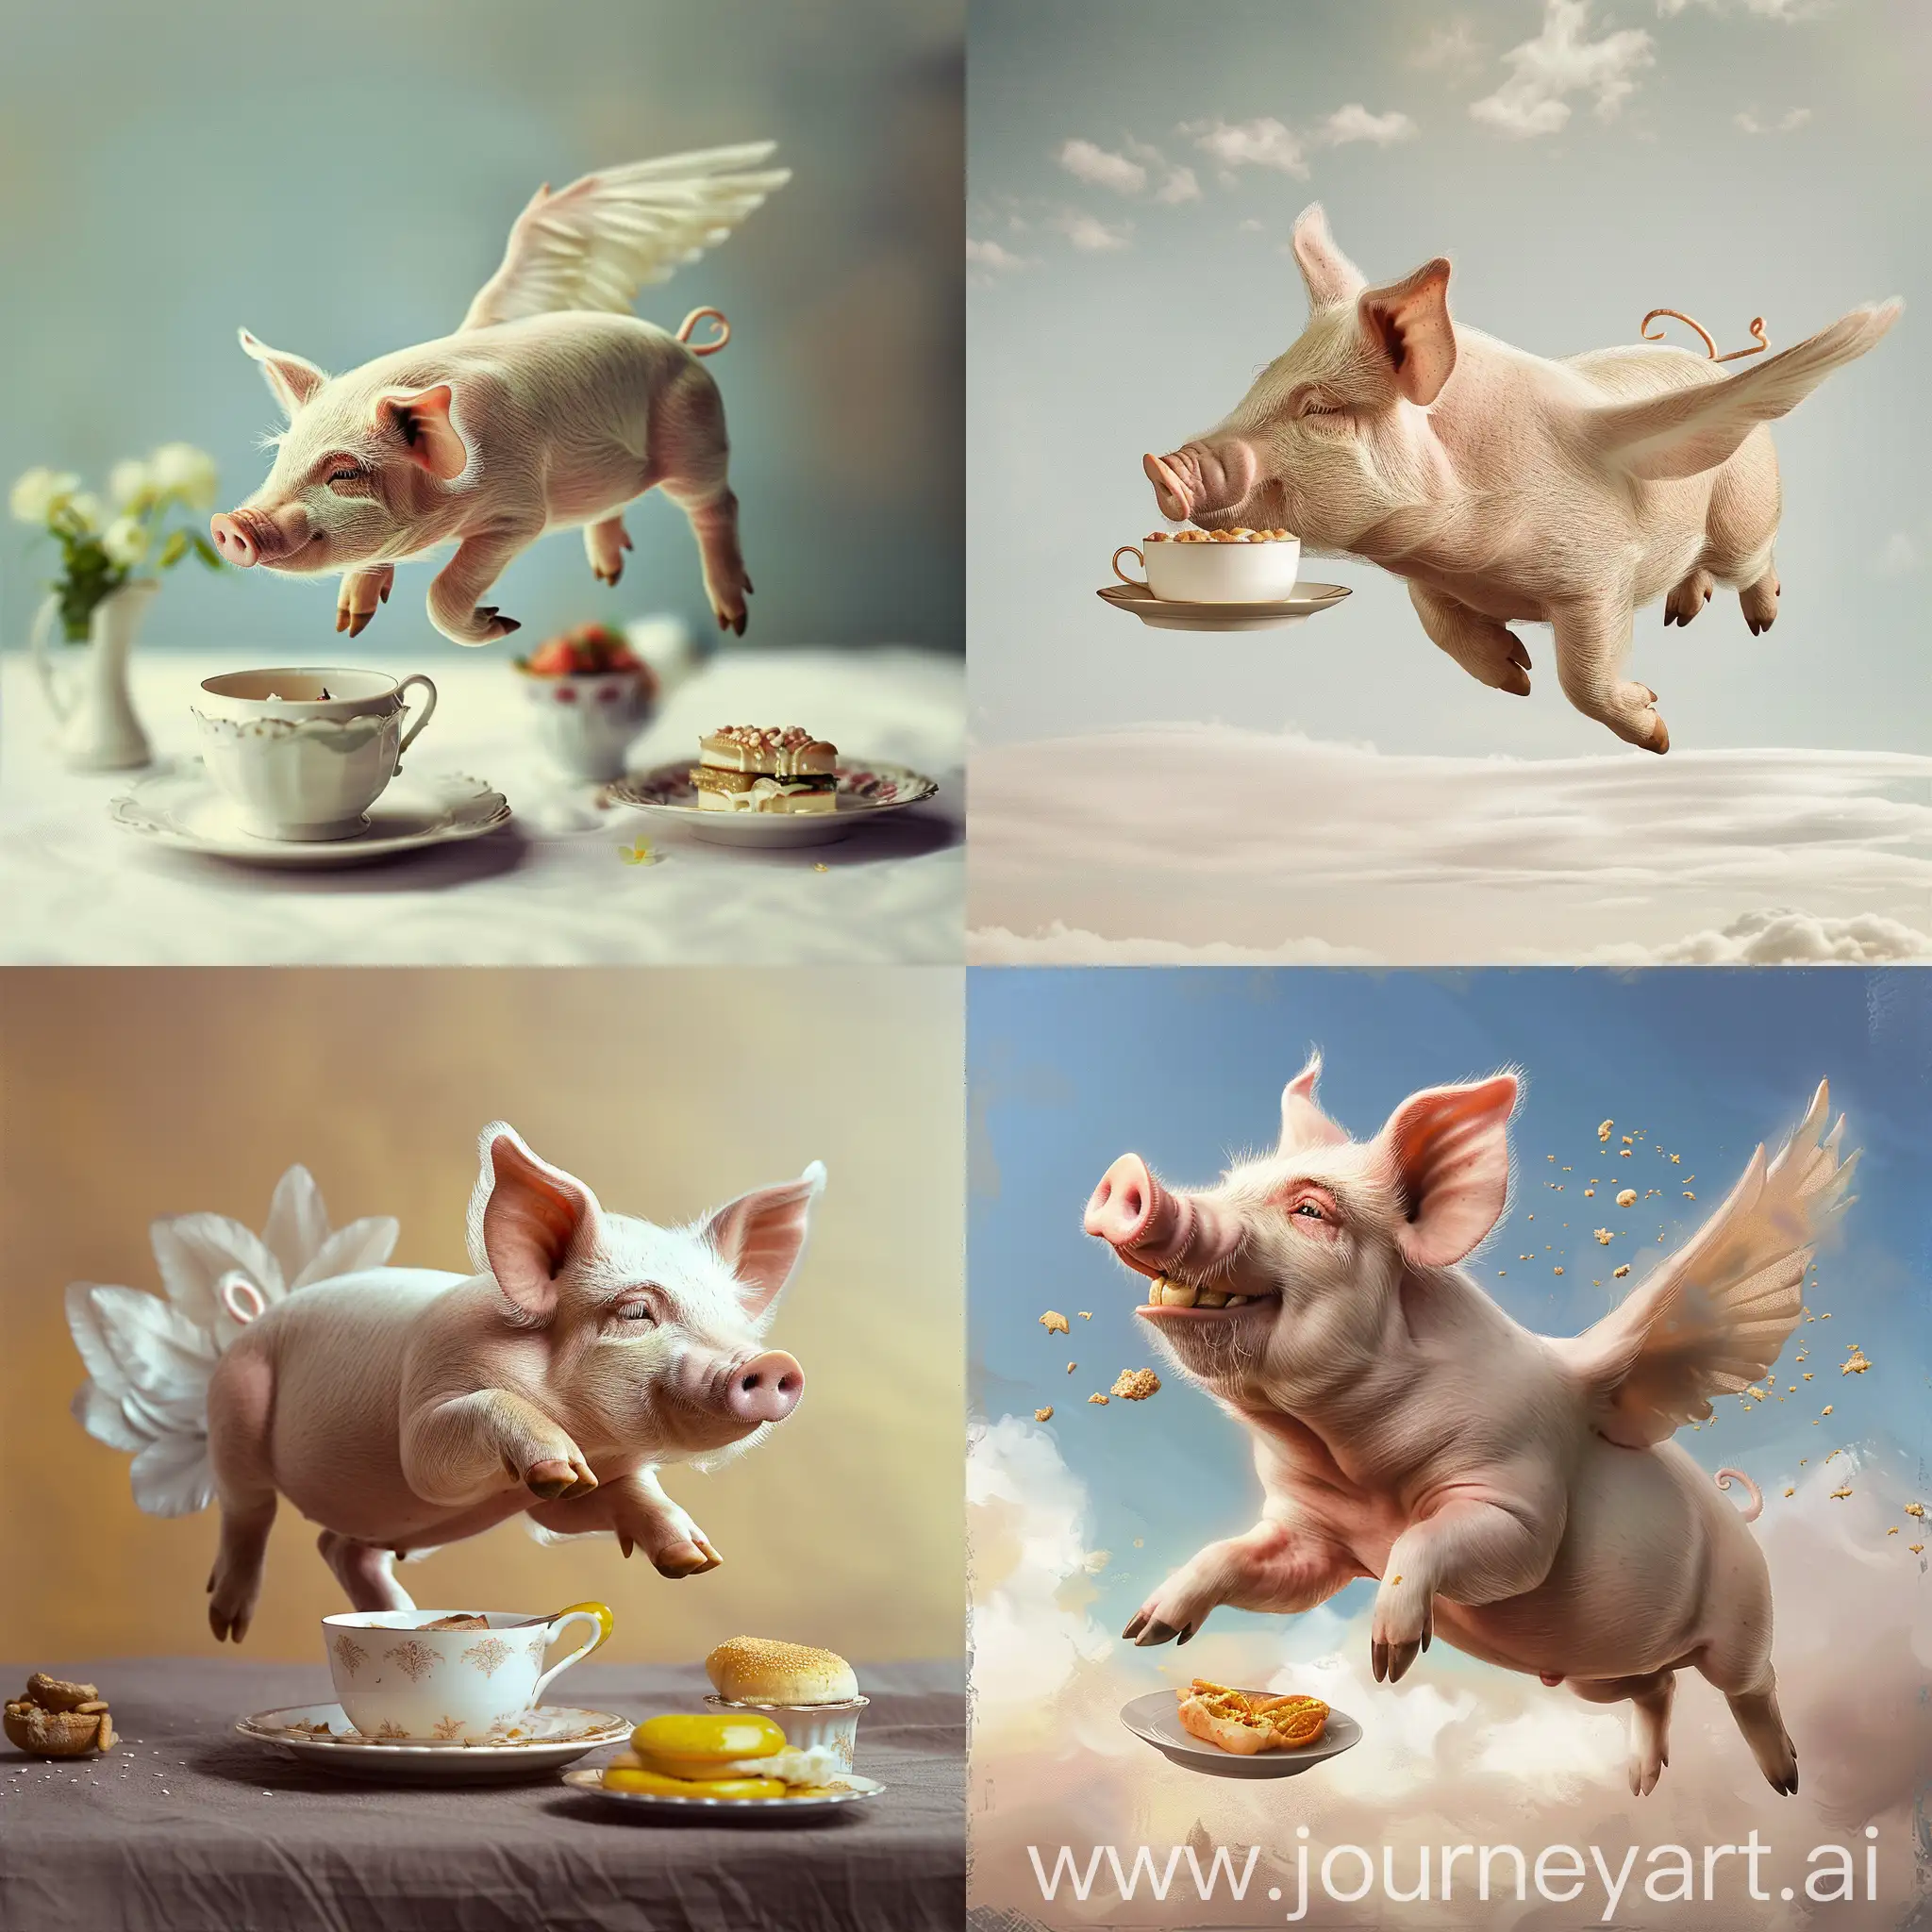 Whimsical-Flying-Pig-Enjoying-a-Morning-Feast